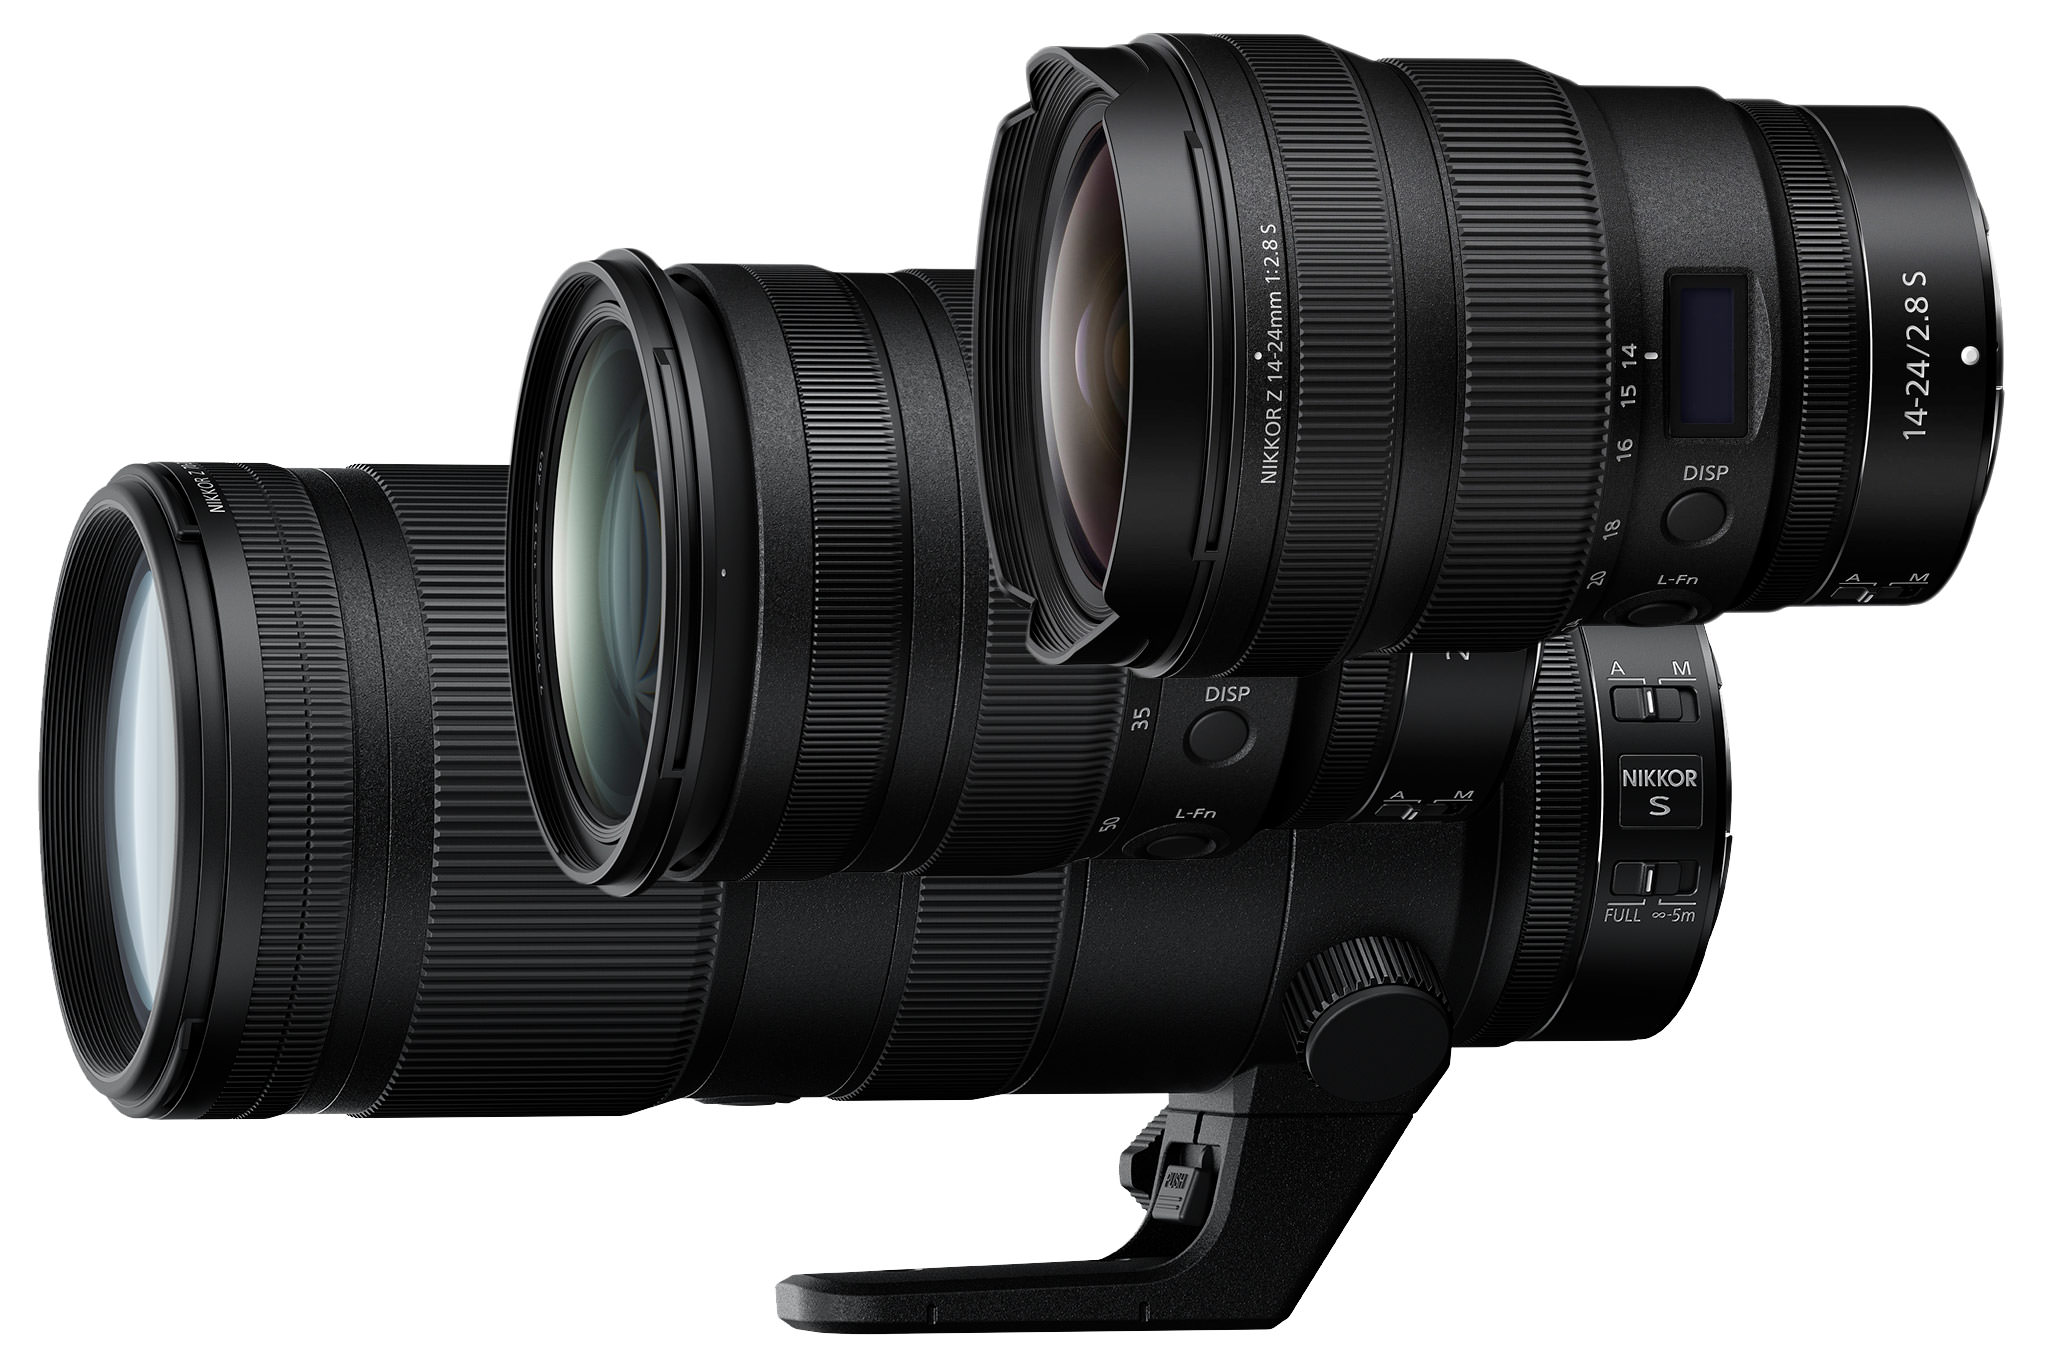 Nikon Z7 II Mirrorless Camera with 24-200mm Lens Kit